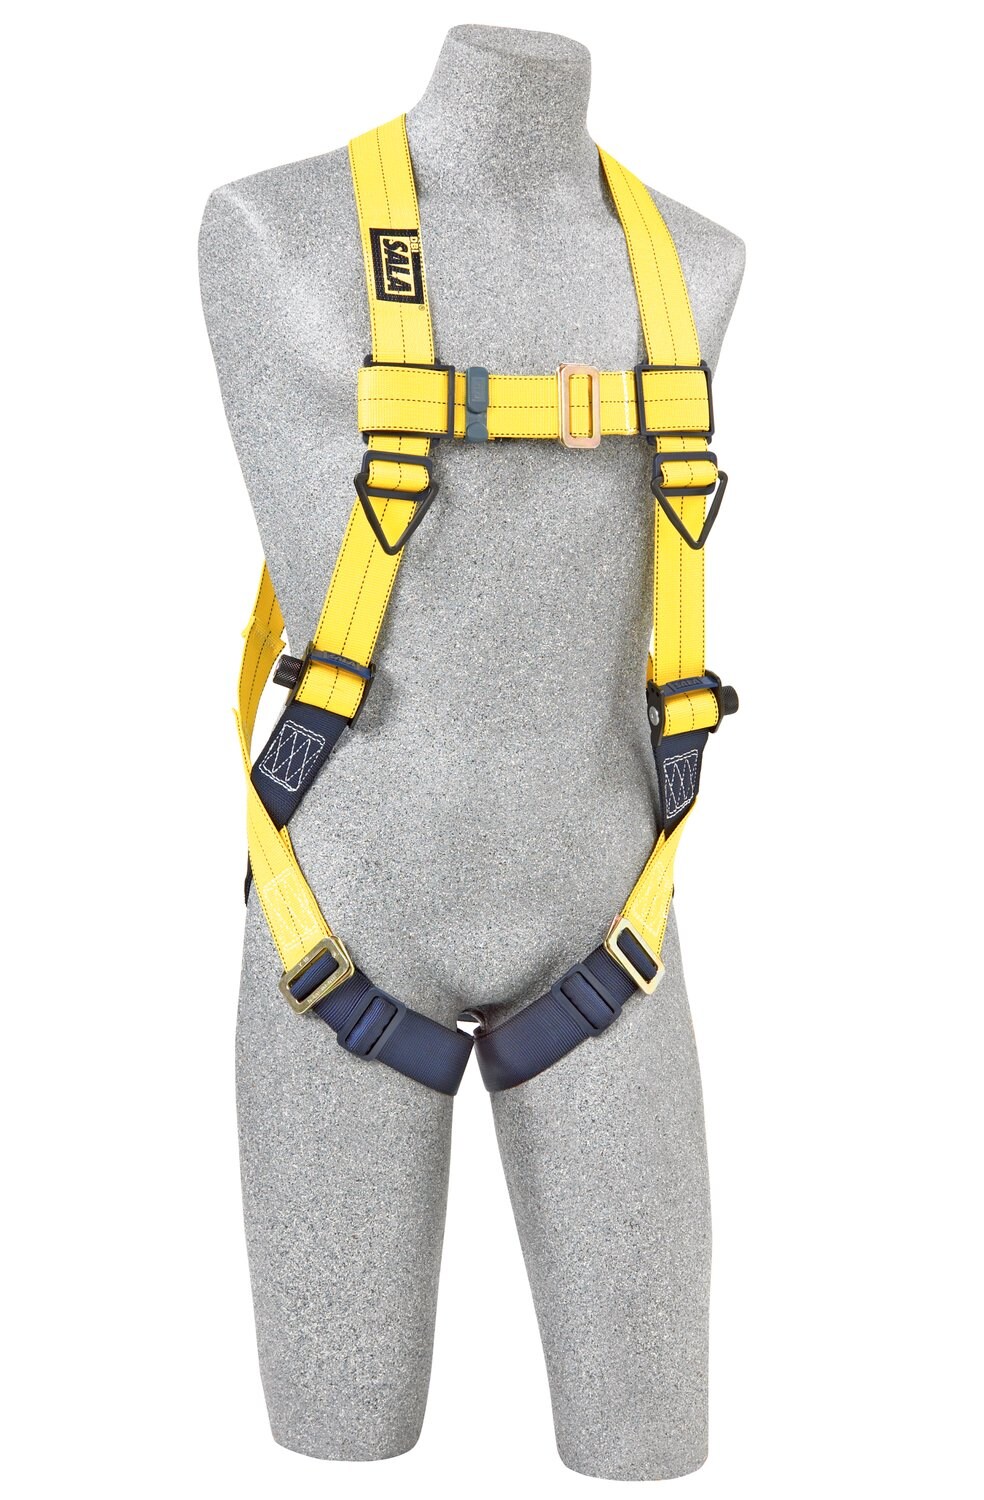 7012815279 - 3M DBI-SALA Delta Vest Safety Harness 1101787, 2X